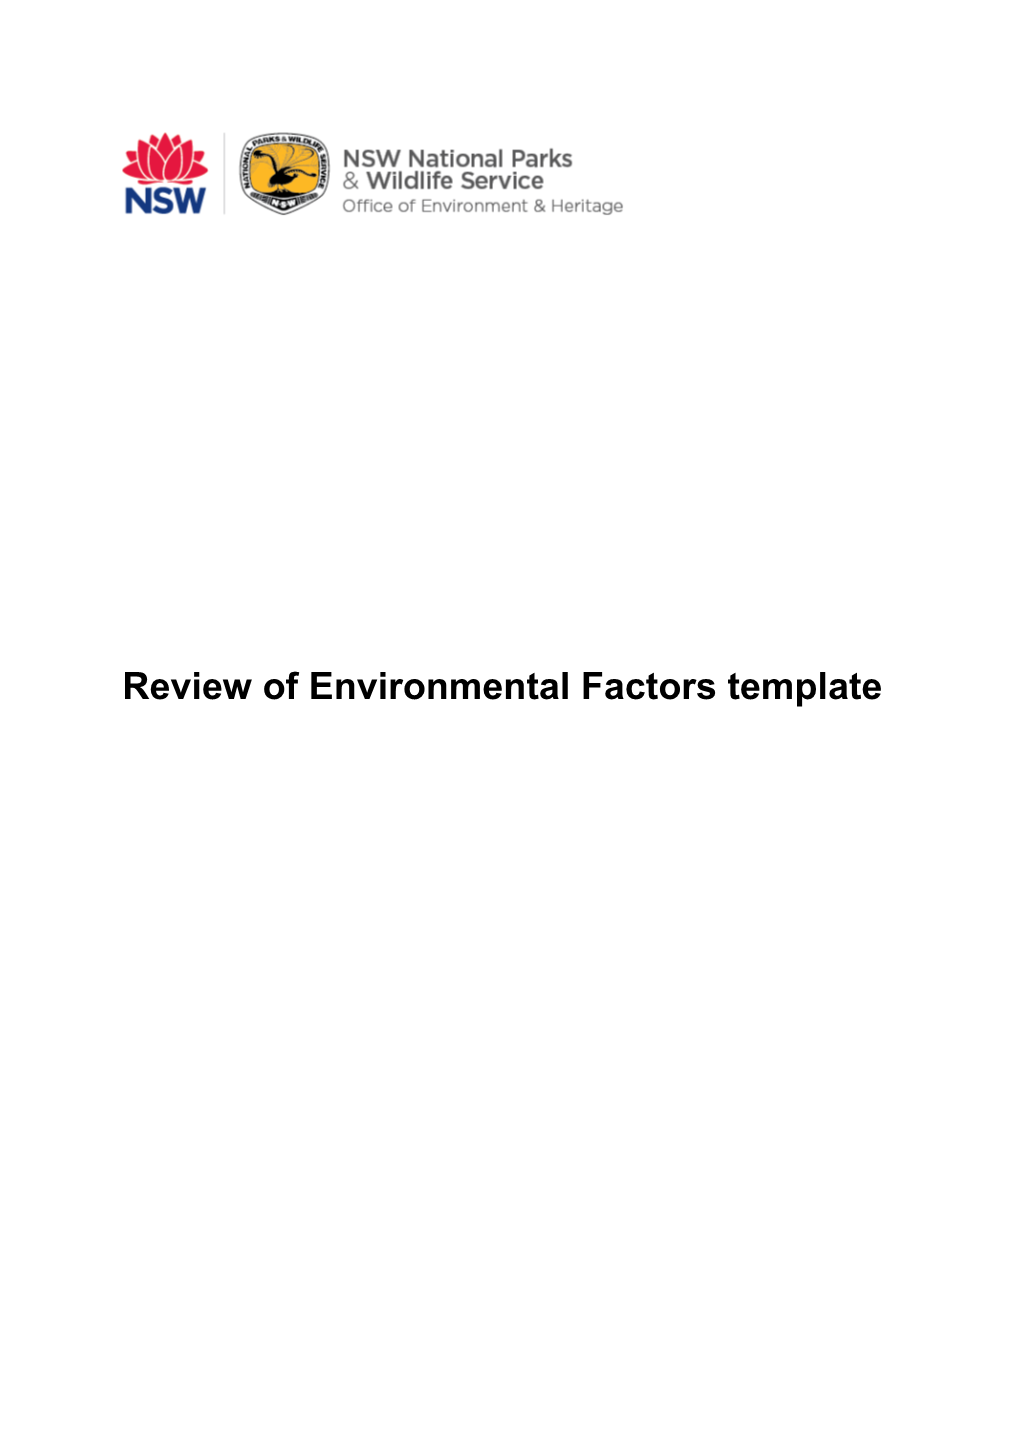 Review of Environmental Factors Template